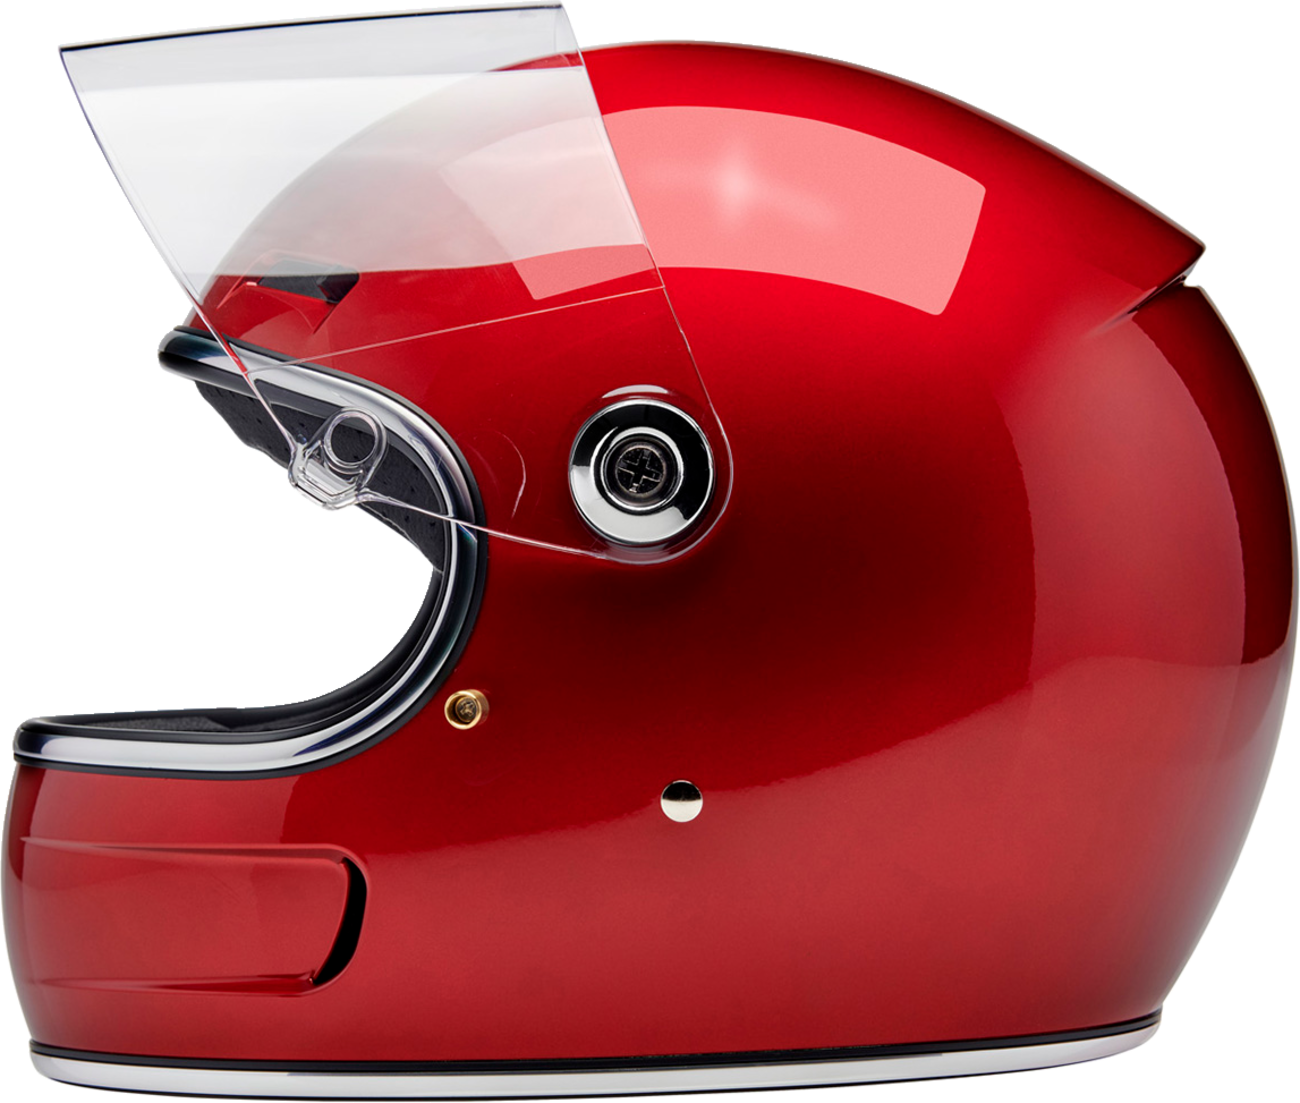 BILTWELL Gringo SV Helmet - Metallic Cherry Red - Large 1006-351-504